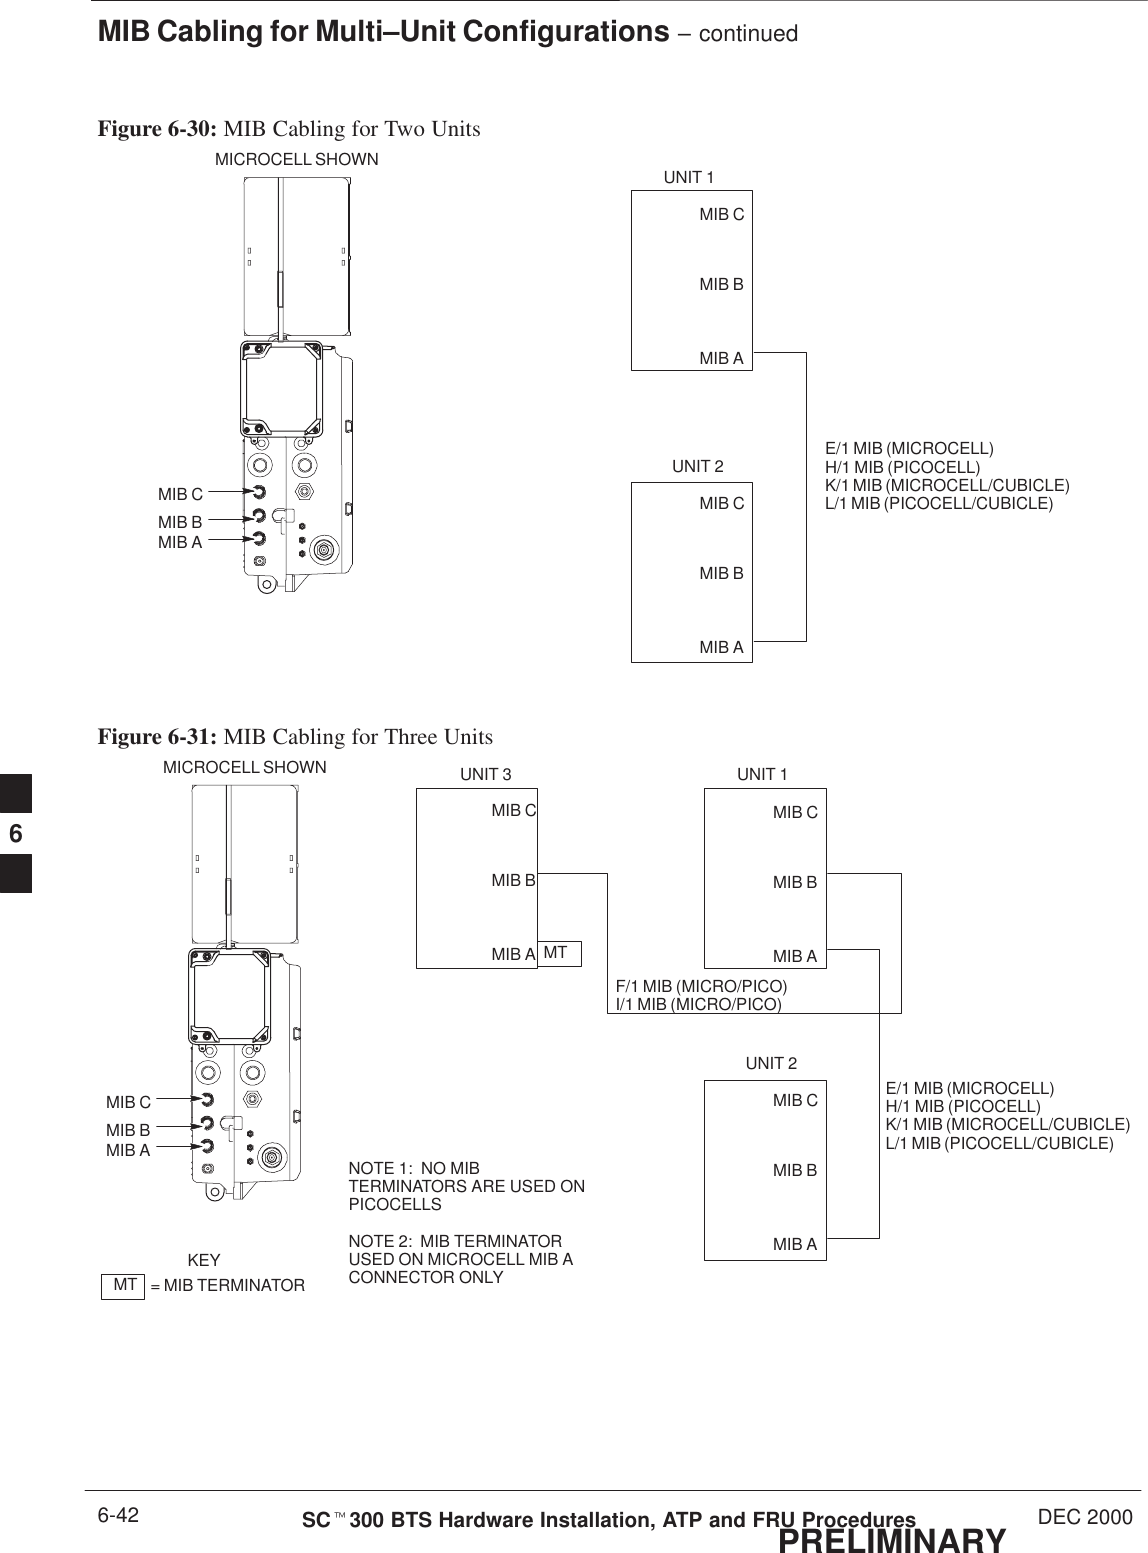 MIB Cabling for Multi–Unit Configurations – continuedPRELIMINARYSCt300 BTS Hardware Installation, ATP and FRU Procedures DEC 20006-42Figure 6-30: MIB Cabling for Two UnitsMICROCELL SHOWNMIB CMIB BMIB AUNIT 1UNIT 2MIB CMIB BMIB AMIB CMIB BMIB AE/1 MIB (MICROCELL)H/1 MIB (PICOCELL)K/1 MIB (MICROCELL/CUBICLE)L/1 MIB (PICOCELL/CUBICLE)Figure 6-31: MIB Cabling for Three UnitsMICROCELL SHOWNMIB CMT = MIB TERMINATORKEYMIB BMIB AUNIT 1UNIT 3UNIT 2MIB CMIB BMIB AMIB CMIB BMIB AMIB CMIB BMIB AMTNOTE 1:  NO MIBTERMINATORS ARE USED ONPICOCELLSNOTE 2:  MIB TERMINATORUSED ON MICROCELL MIB ACONNECTOR ONLYE/1 MIB (MICROCELL)H/1 MIB (PICOCELL)K/1 MIB (MICROCELL/CUBICLE)L/1 MIB (PICOCELL/CUBICLE)F/1 MIB (MICRO/PICO)I/1 MIB (MICRO/PICO)6